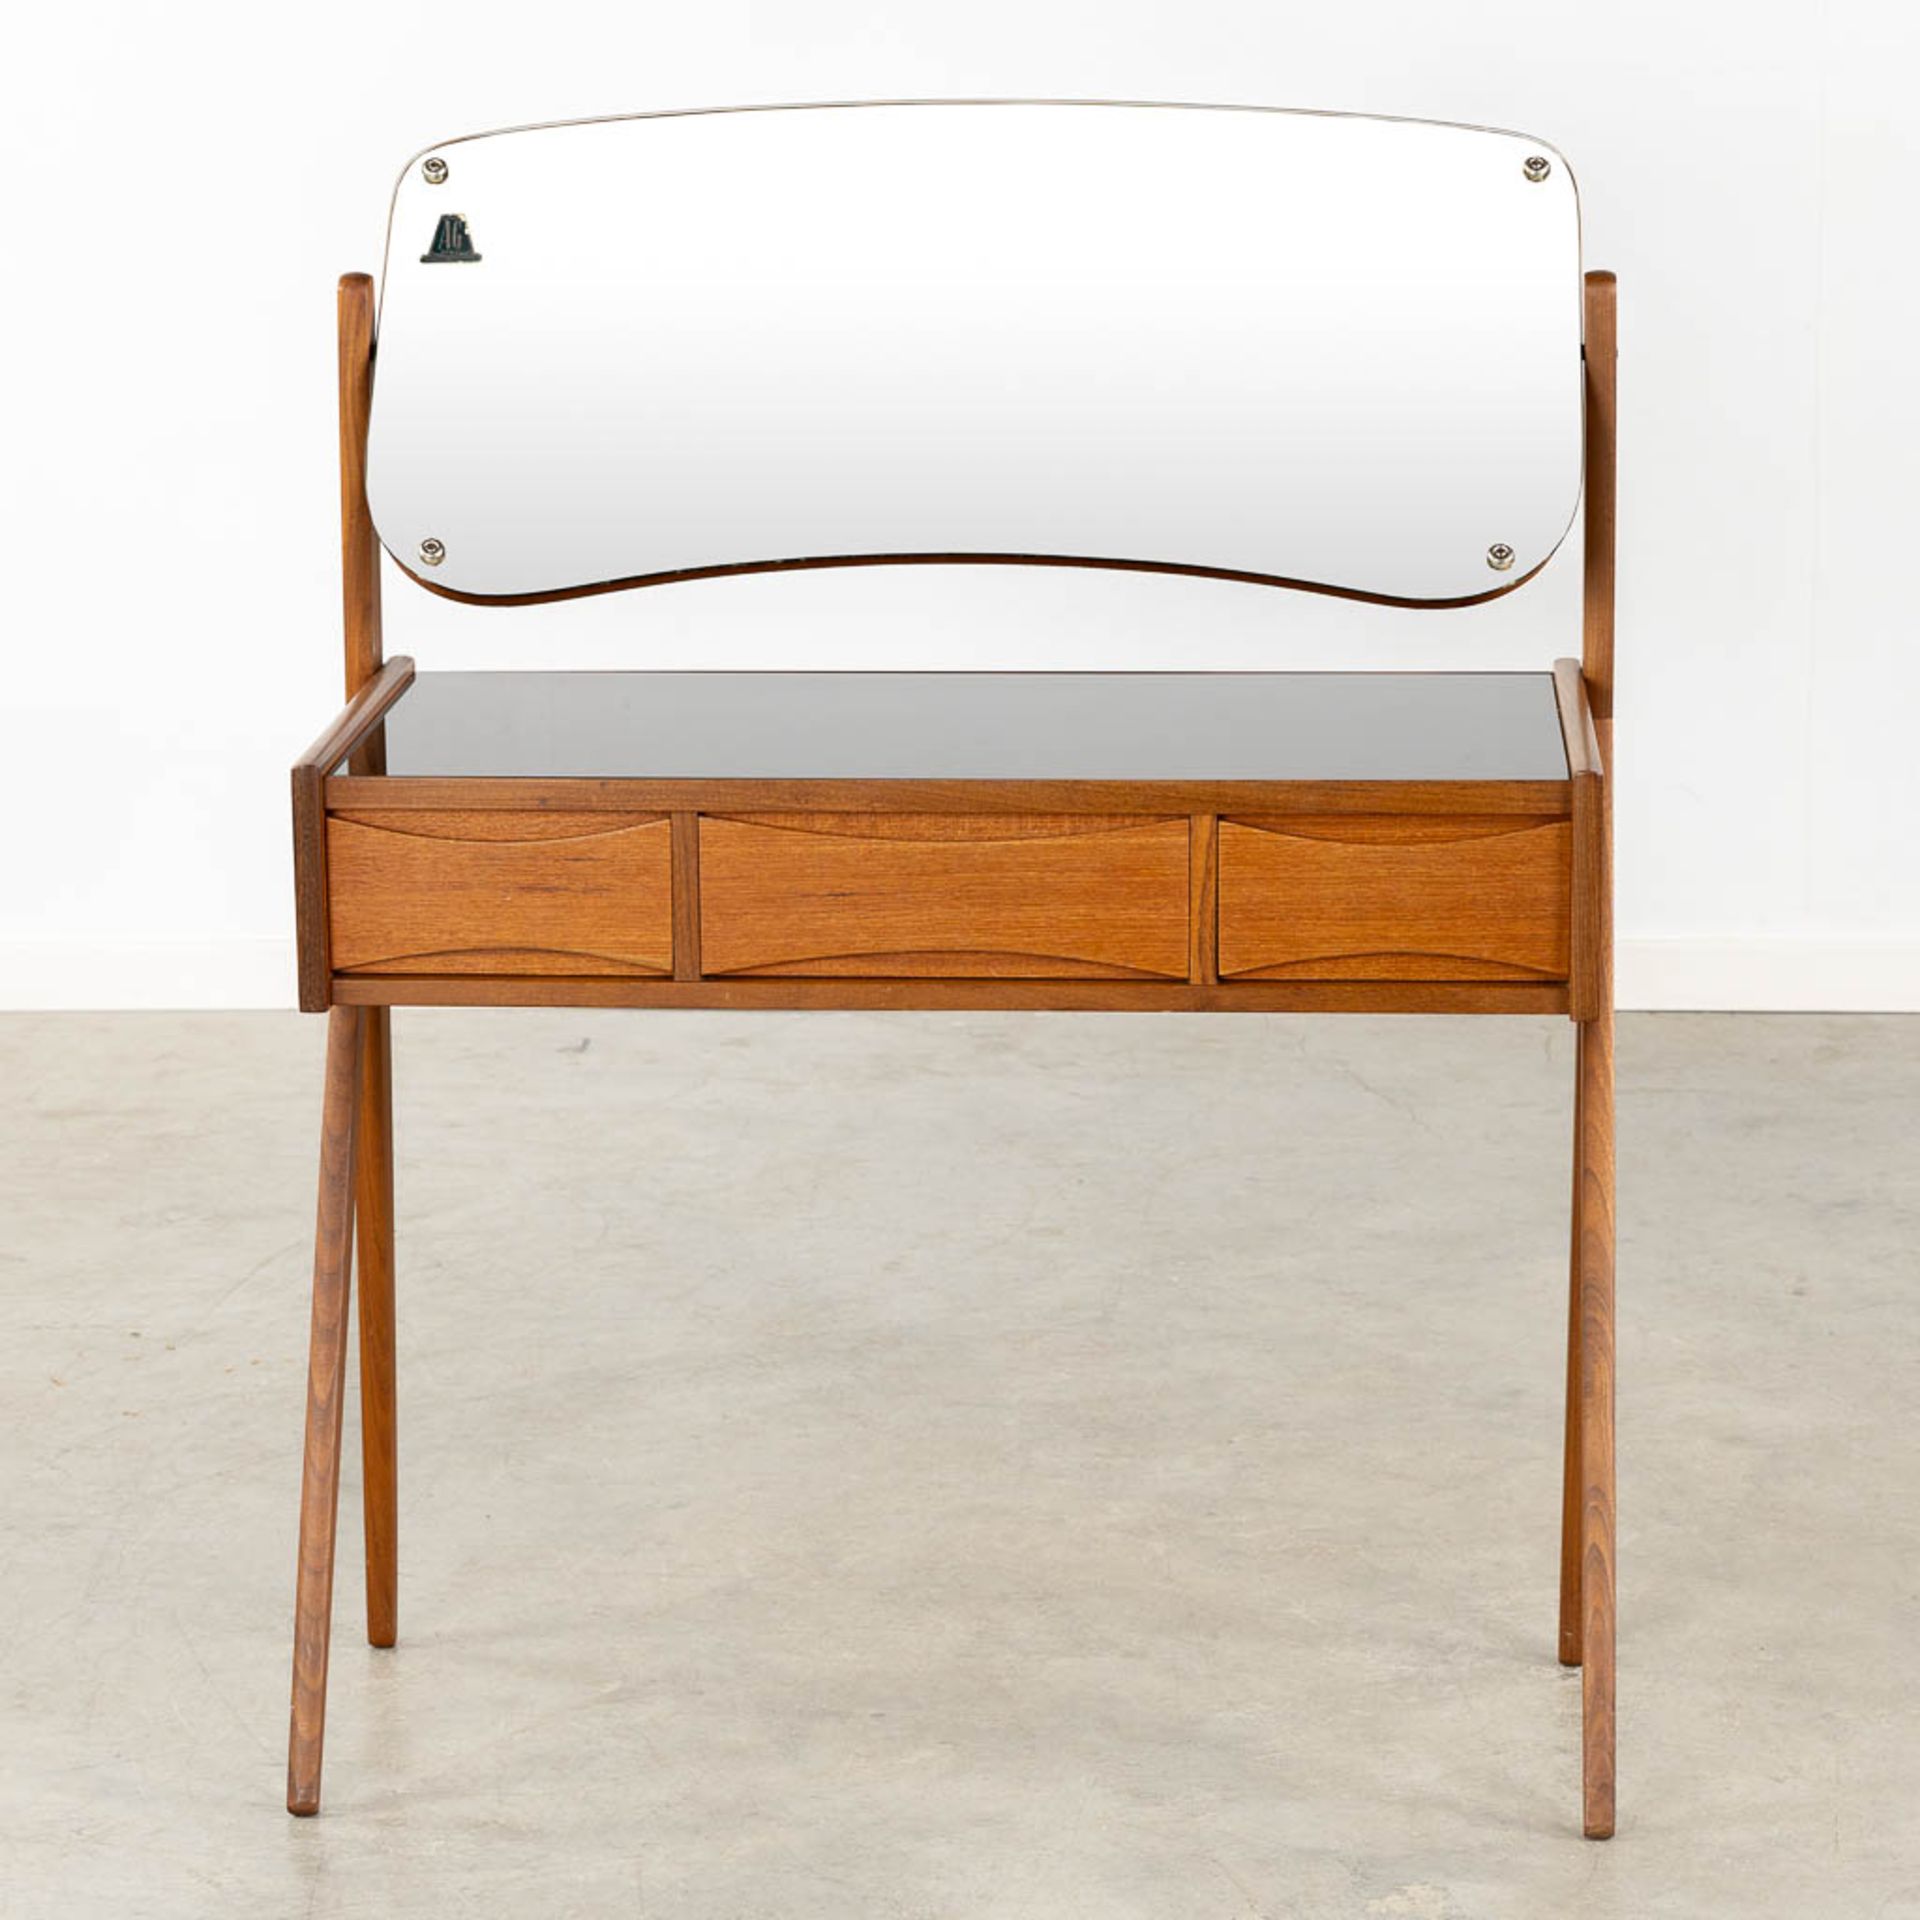 Arne VODDER (1926-2009) 'Dressing table' teak and glass. (L:36 x W:80 x H:105 cm) - Image 4 of 13